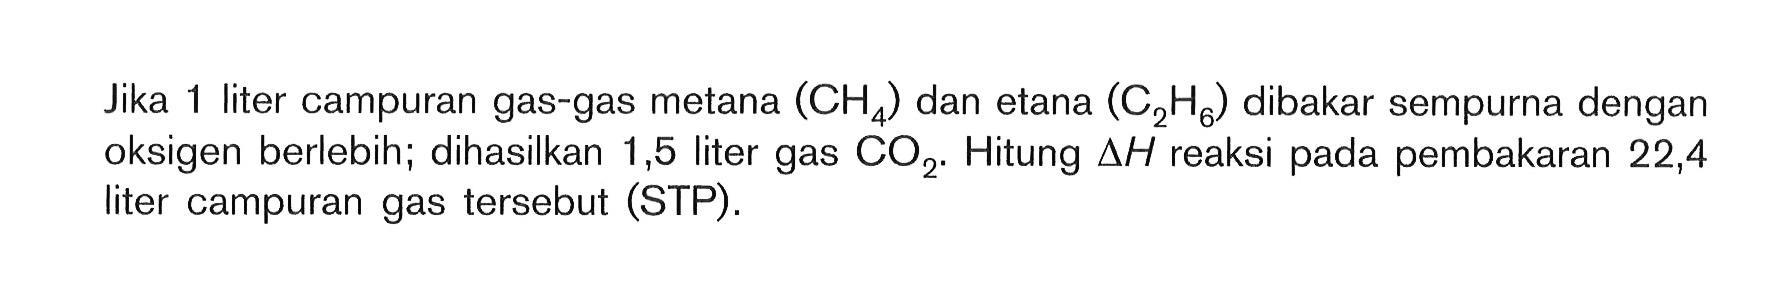 Jika 1 liter campuran gas-gas metana (CH4) dan etana (C2H6) dibakar sempurna dengan oksigen berlebih; dihasilkan 1,5 liter gas CO2 . Hitung delta H reaksi pada pembakaran 22,4 liter campuran gas tersebut (STP).